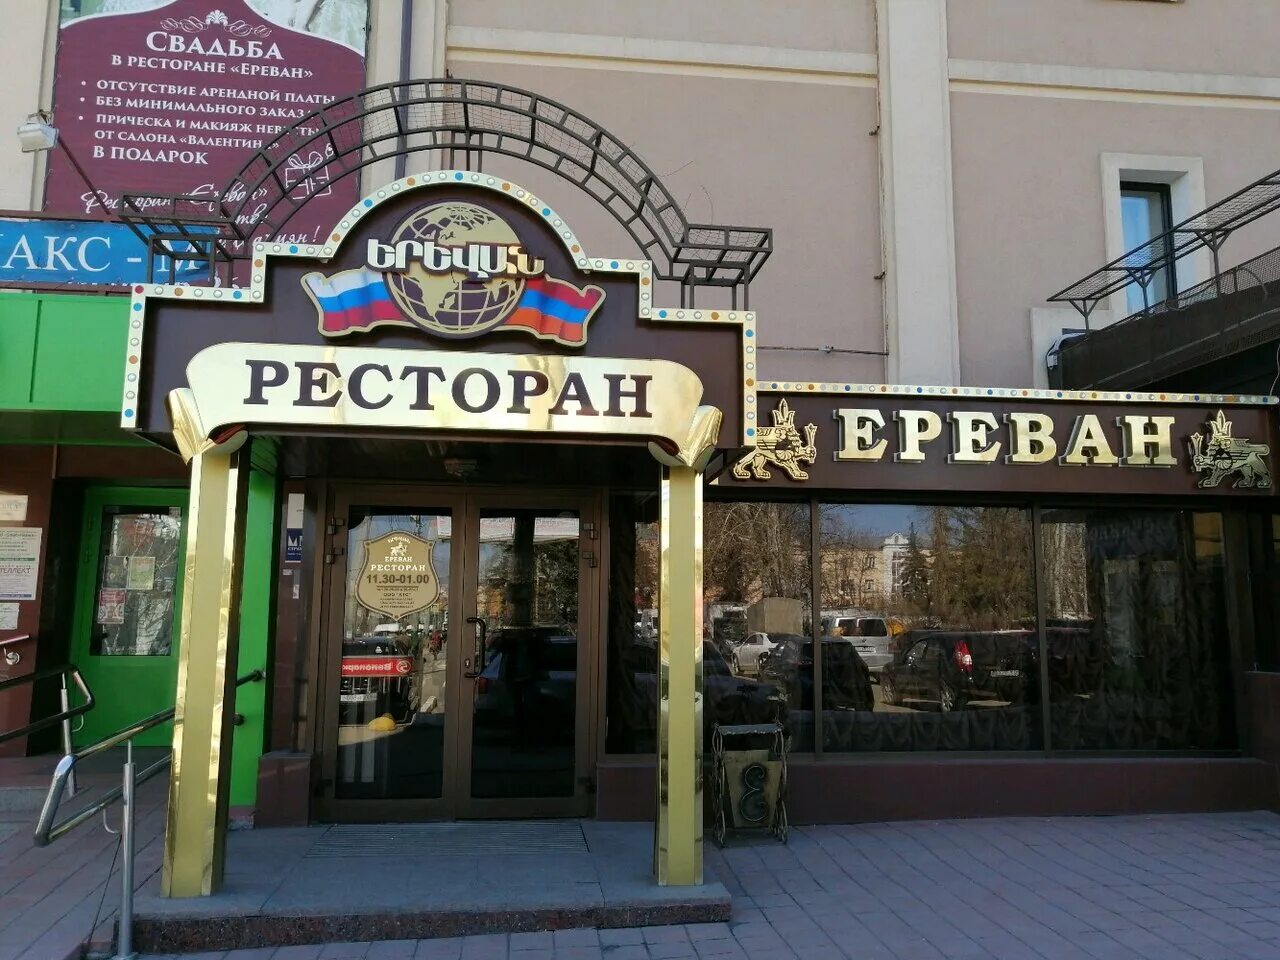 Ресторан ереван пенза. Пенза улица Кирова 42 Ереван. Панорама Ереван ресторан. Меню ресторана Ереван Пенза.